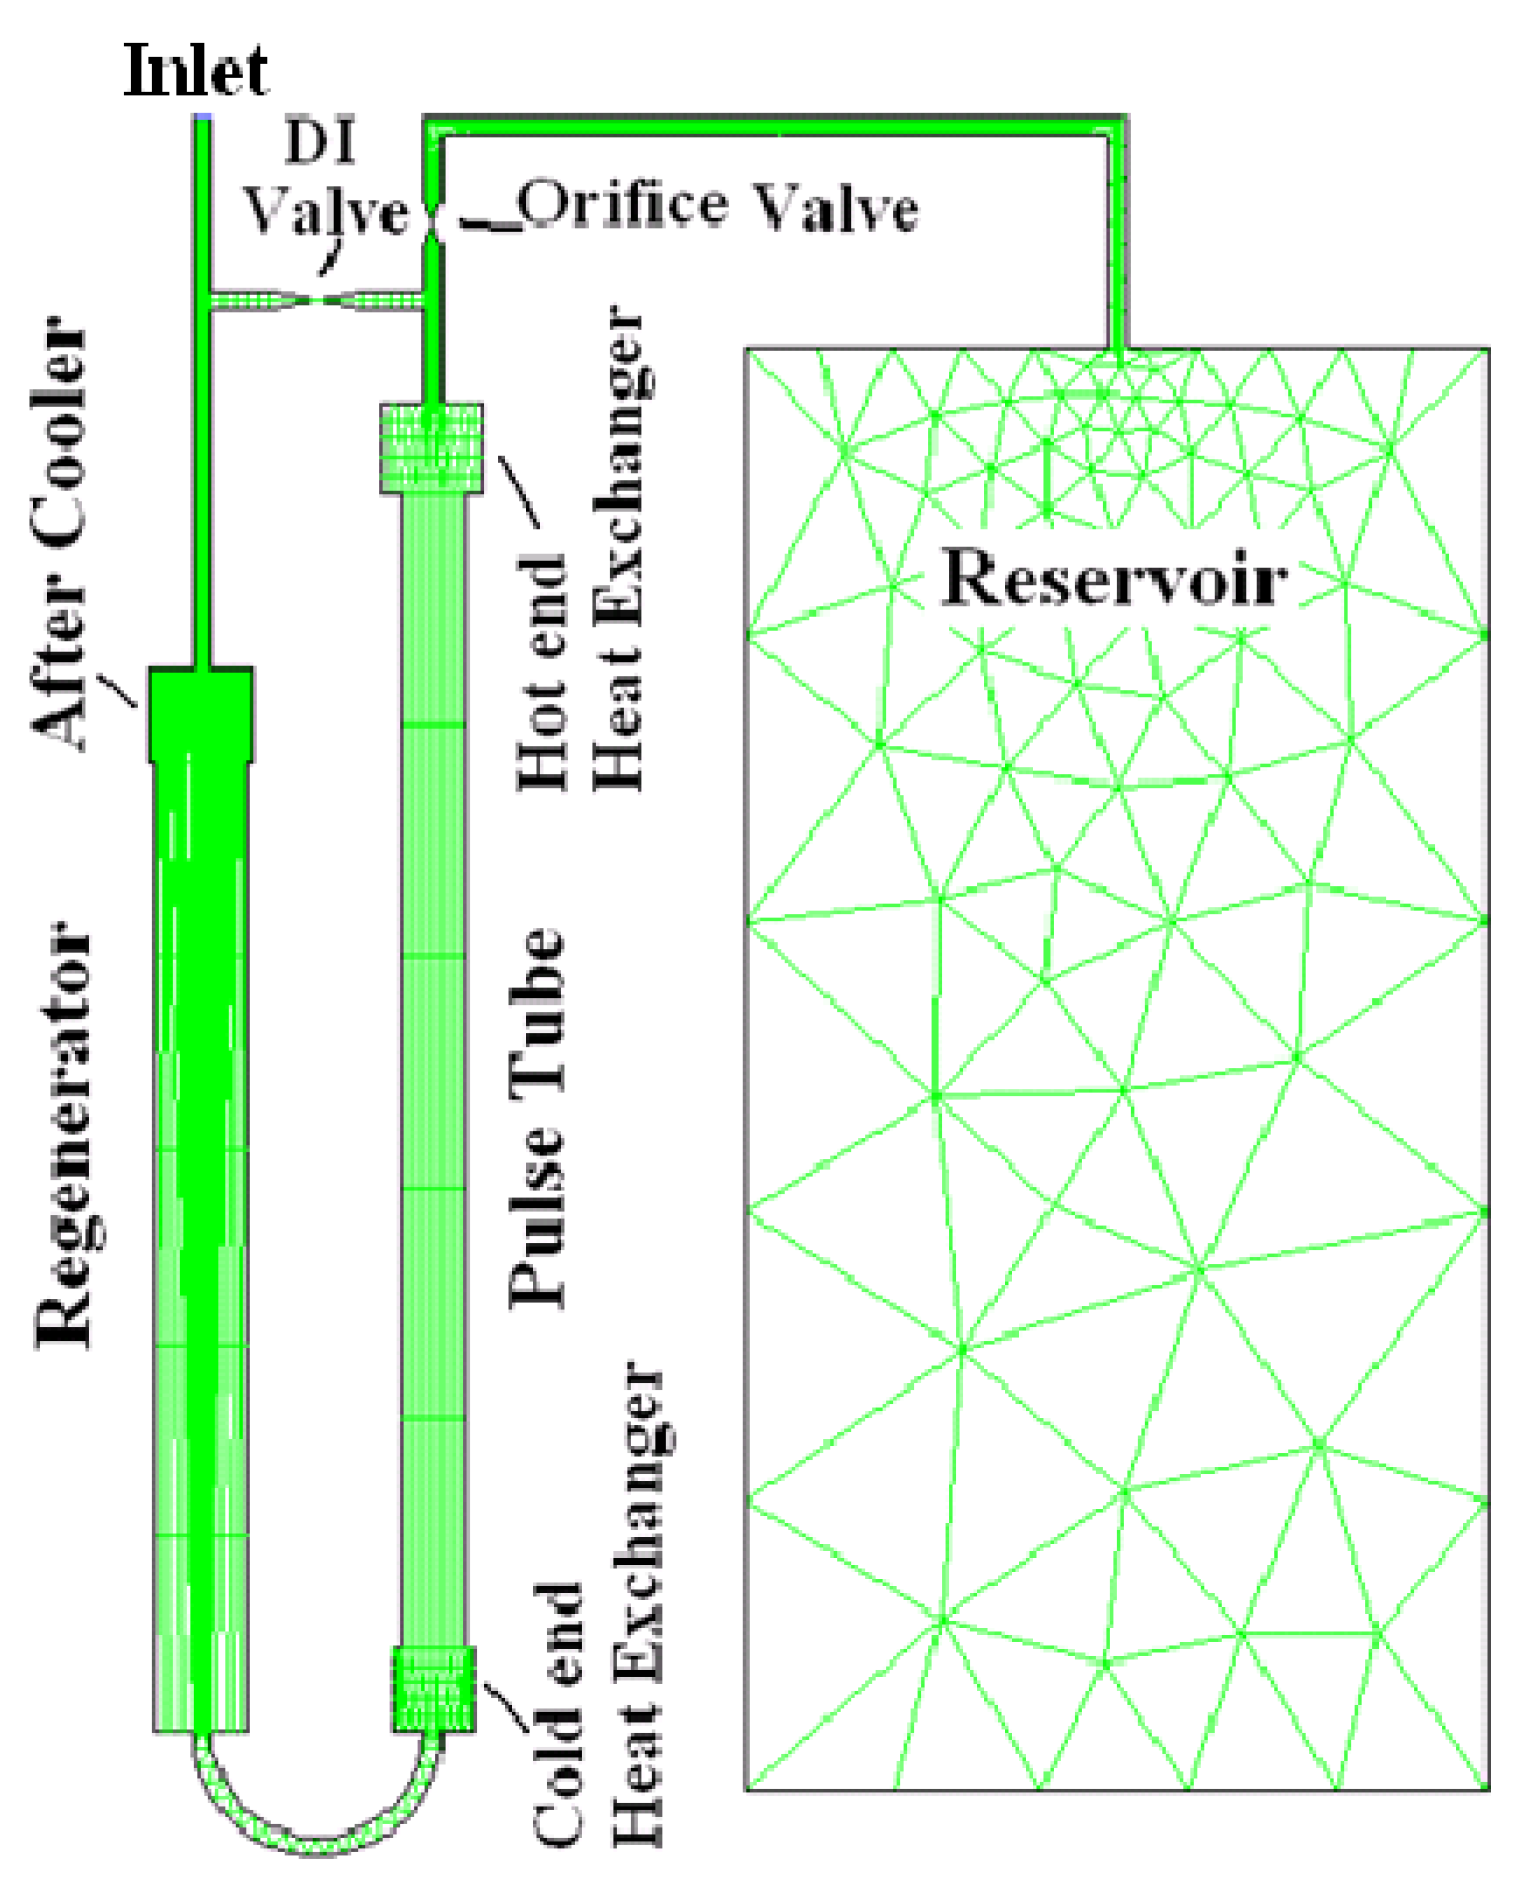 How a Pulse Tube Refrigerator Works - Cryogenic Refrigeration